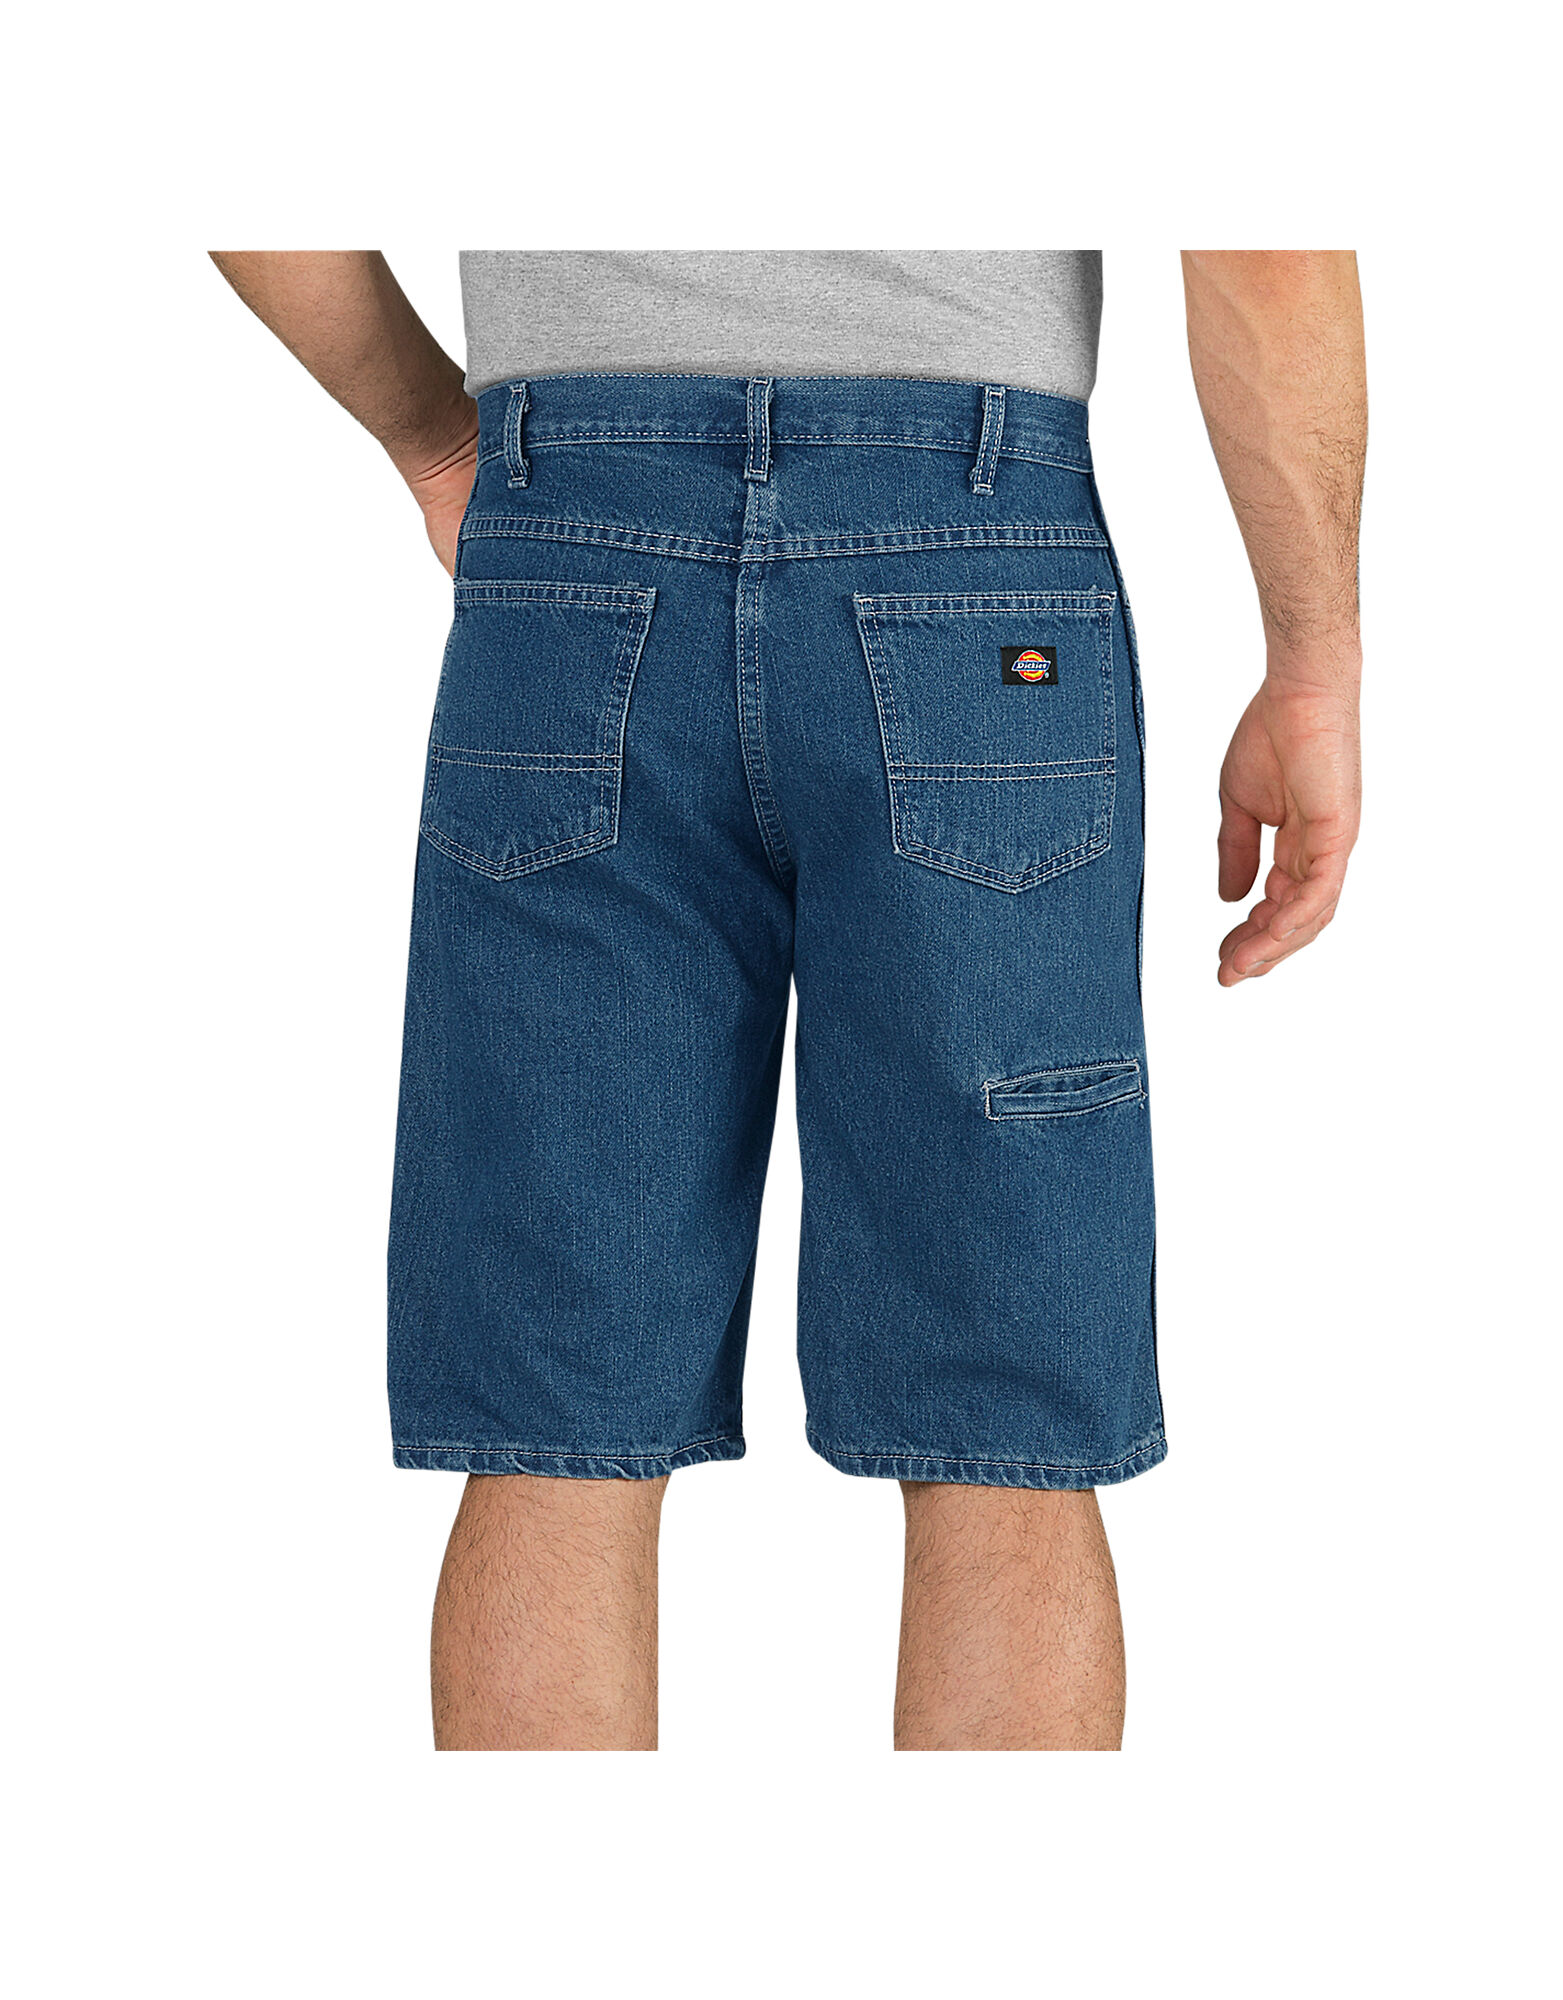 dickies jean shorts